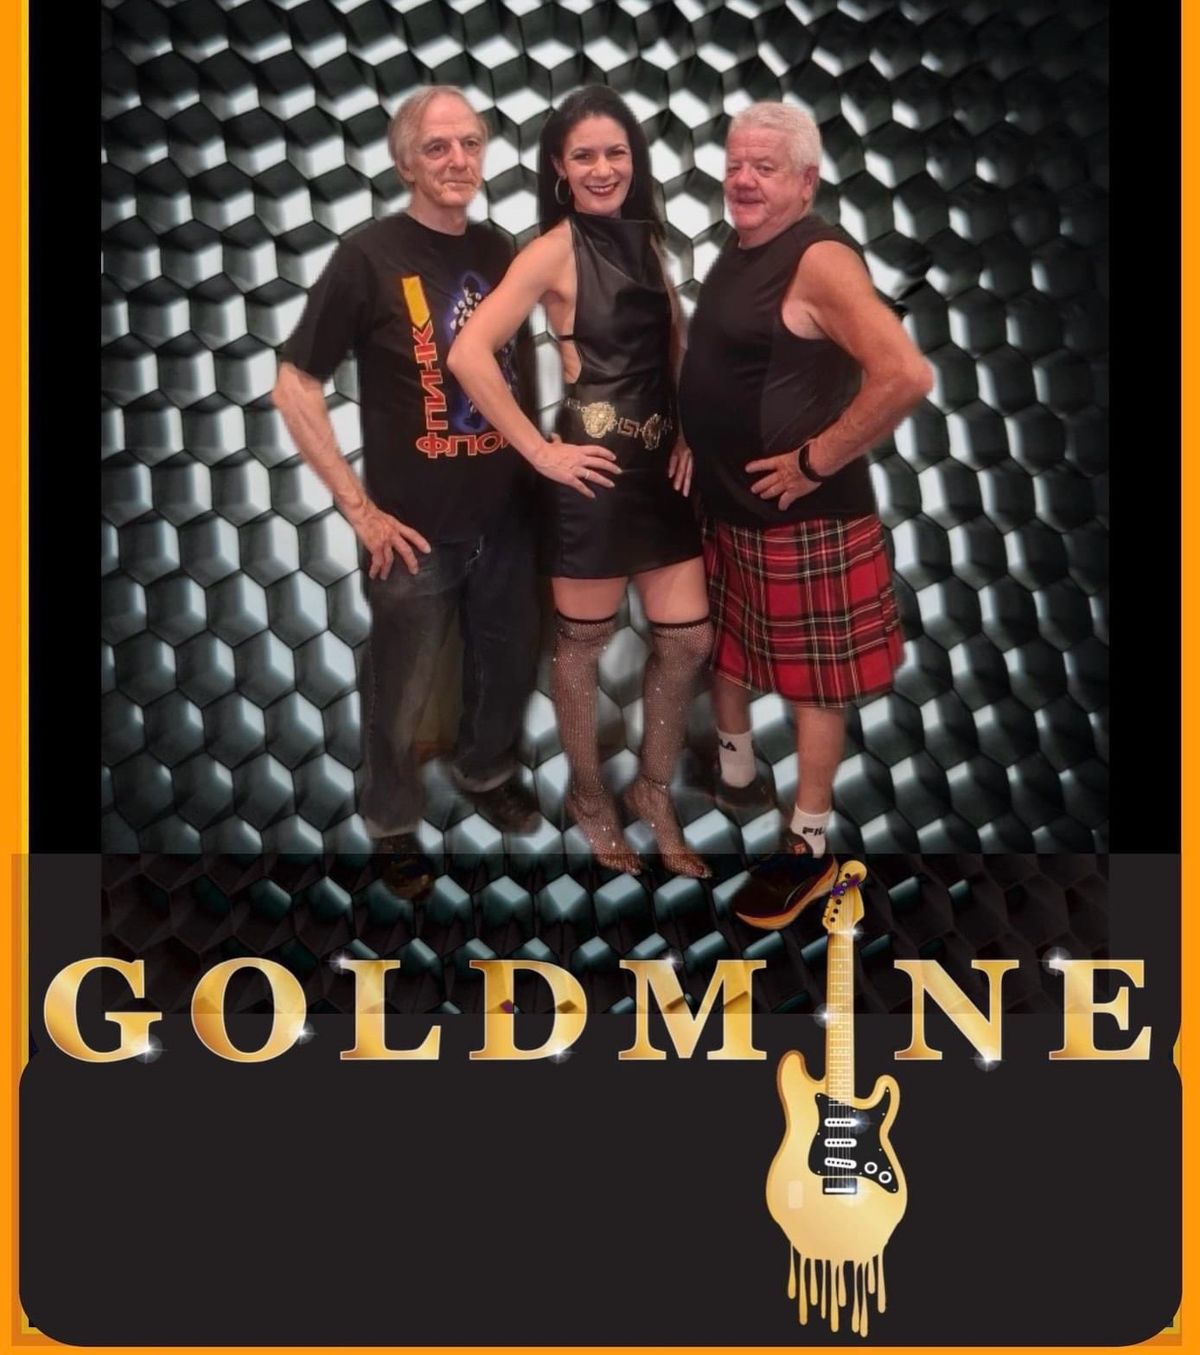 Goldmine @ The Grand Central Bar